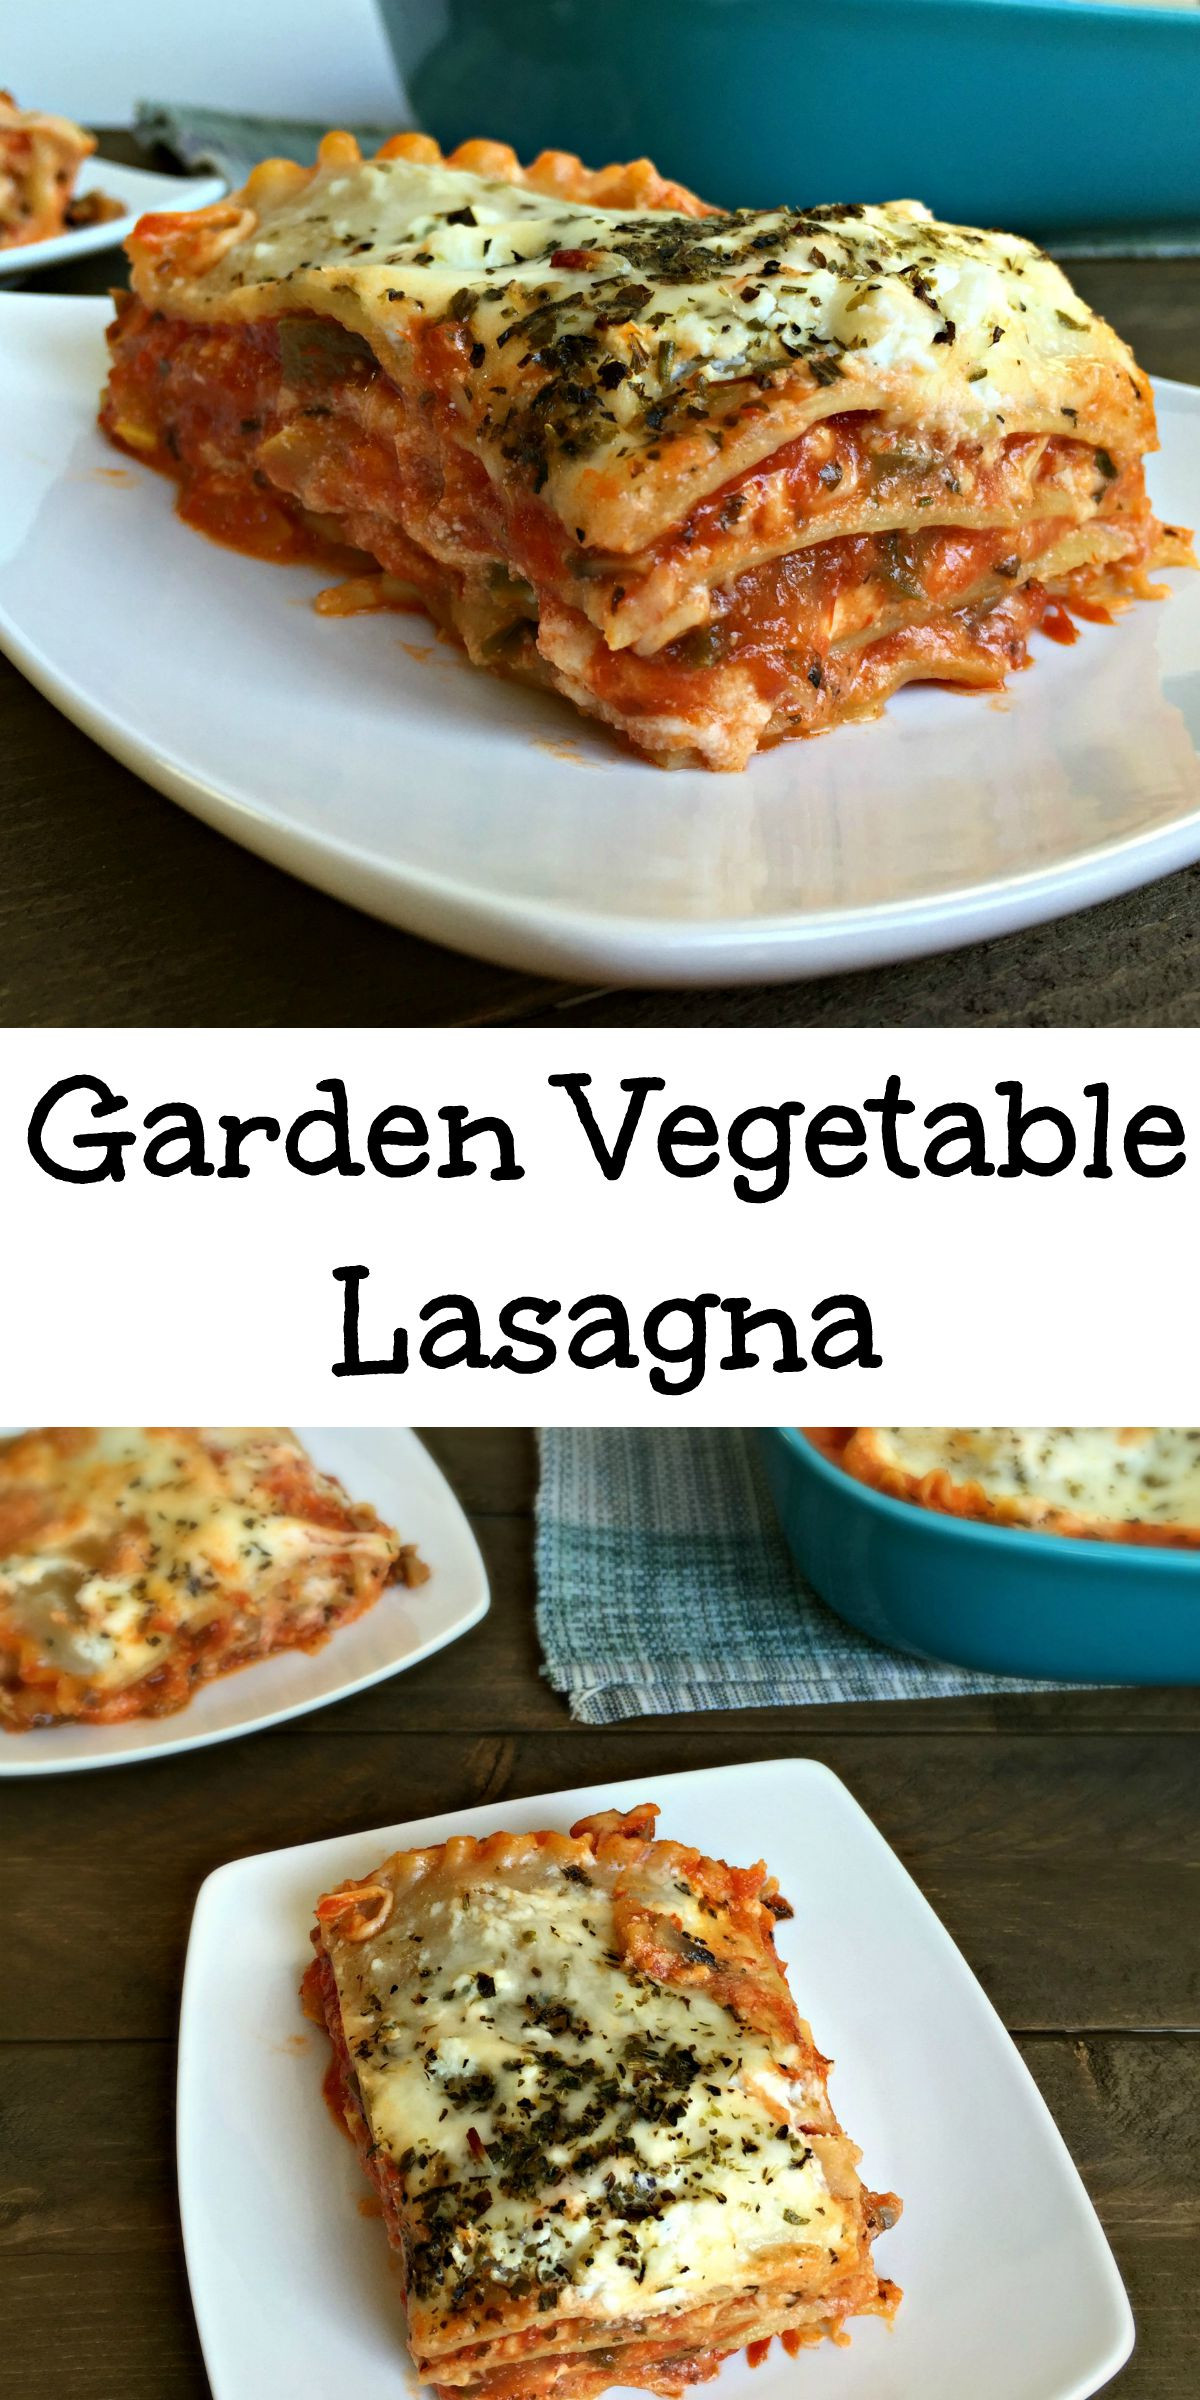 Recipe Vegetable Lasagna
 Garden Ve able Lasagna Freezer Friendly